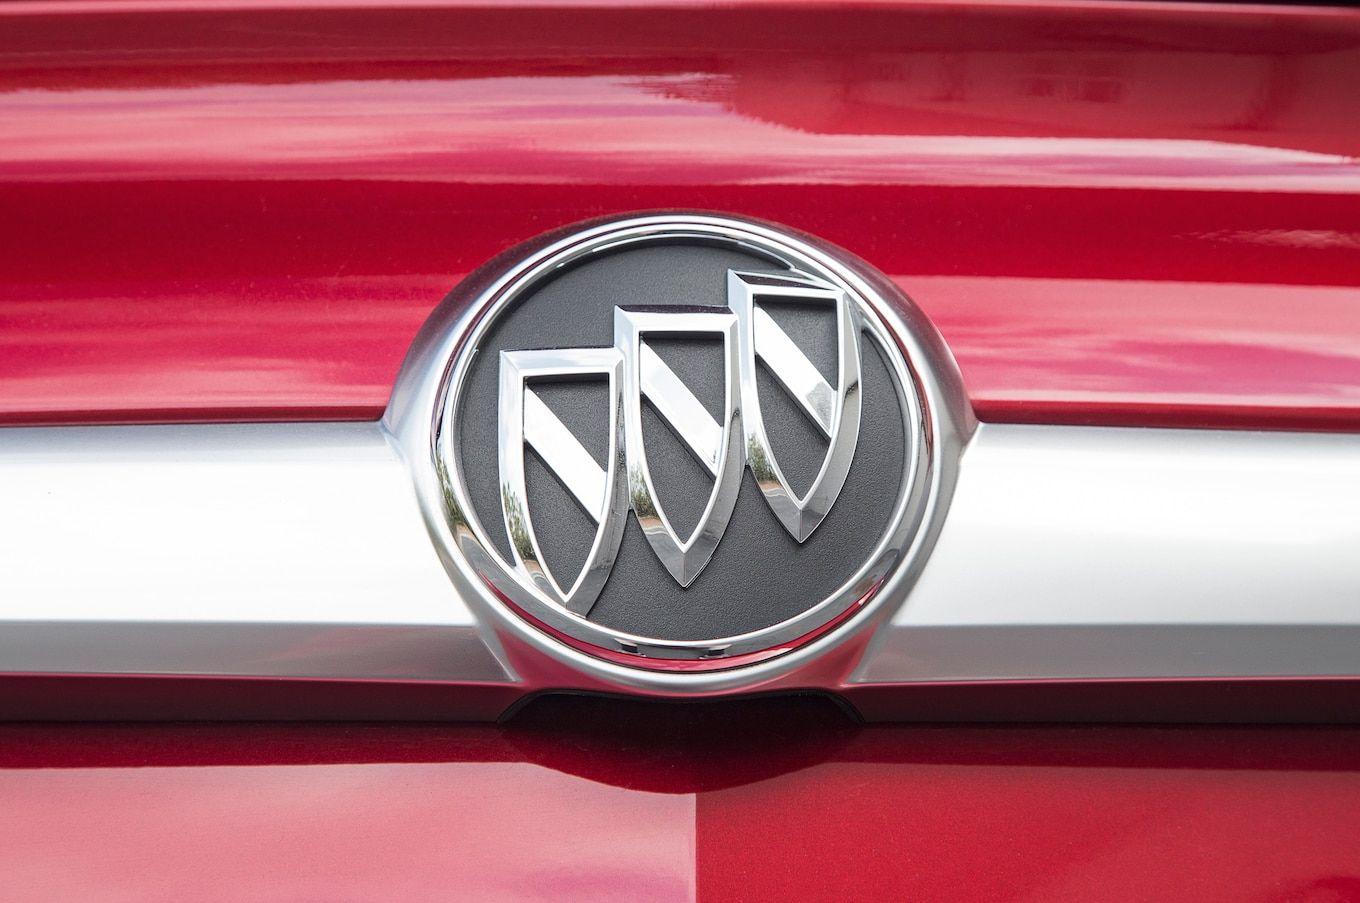 2014 Buick Logo - Buick Regal Reviews and Rating